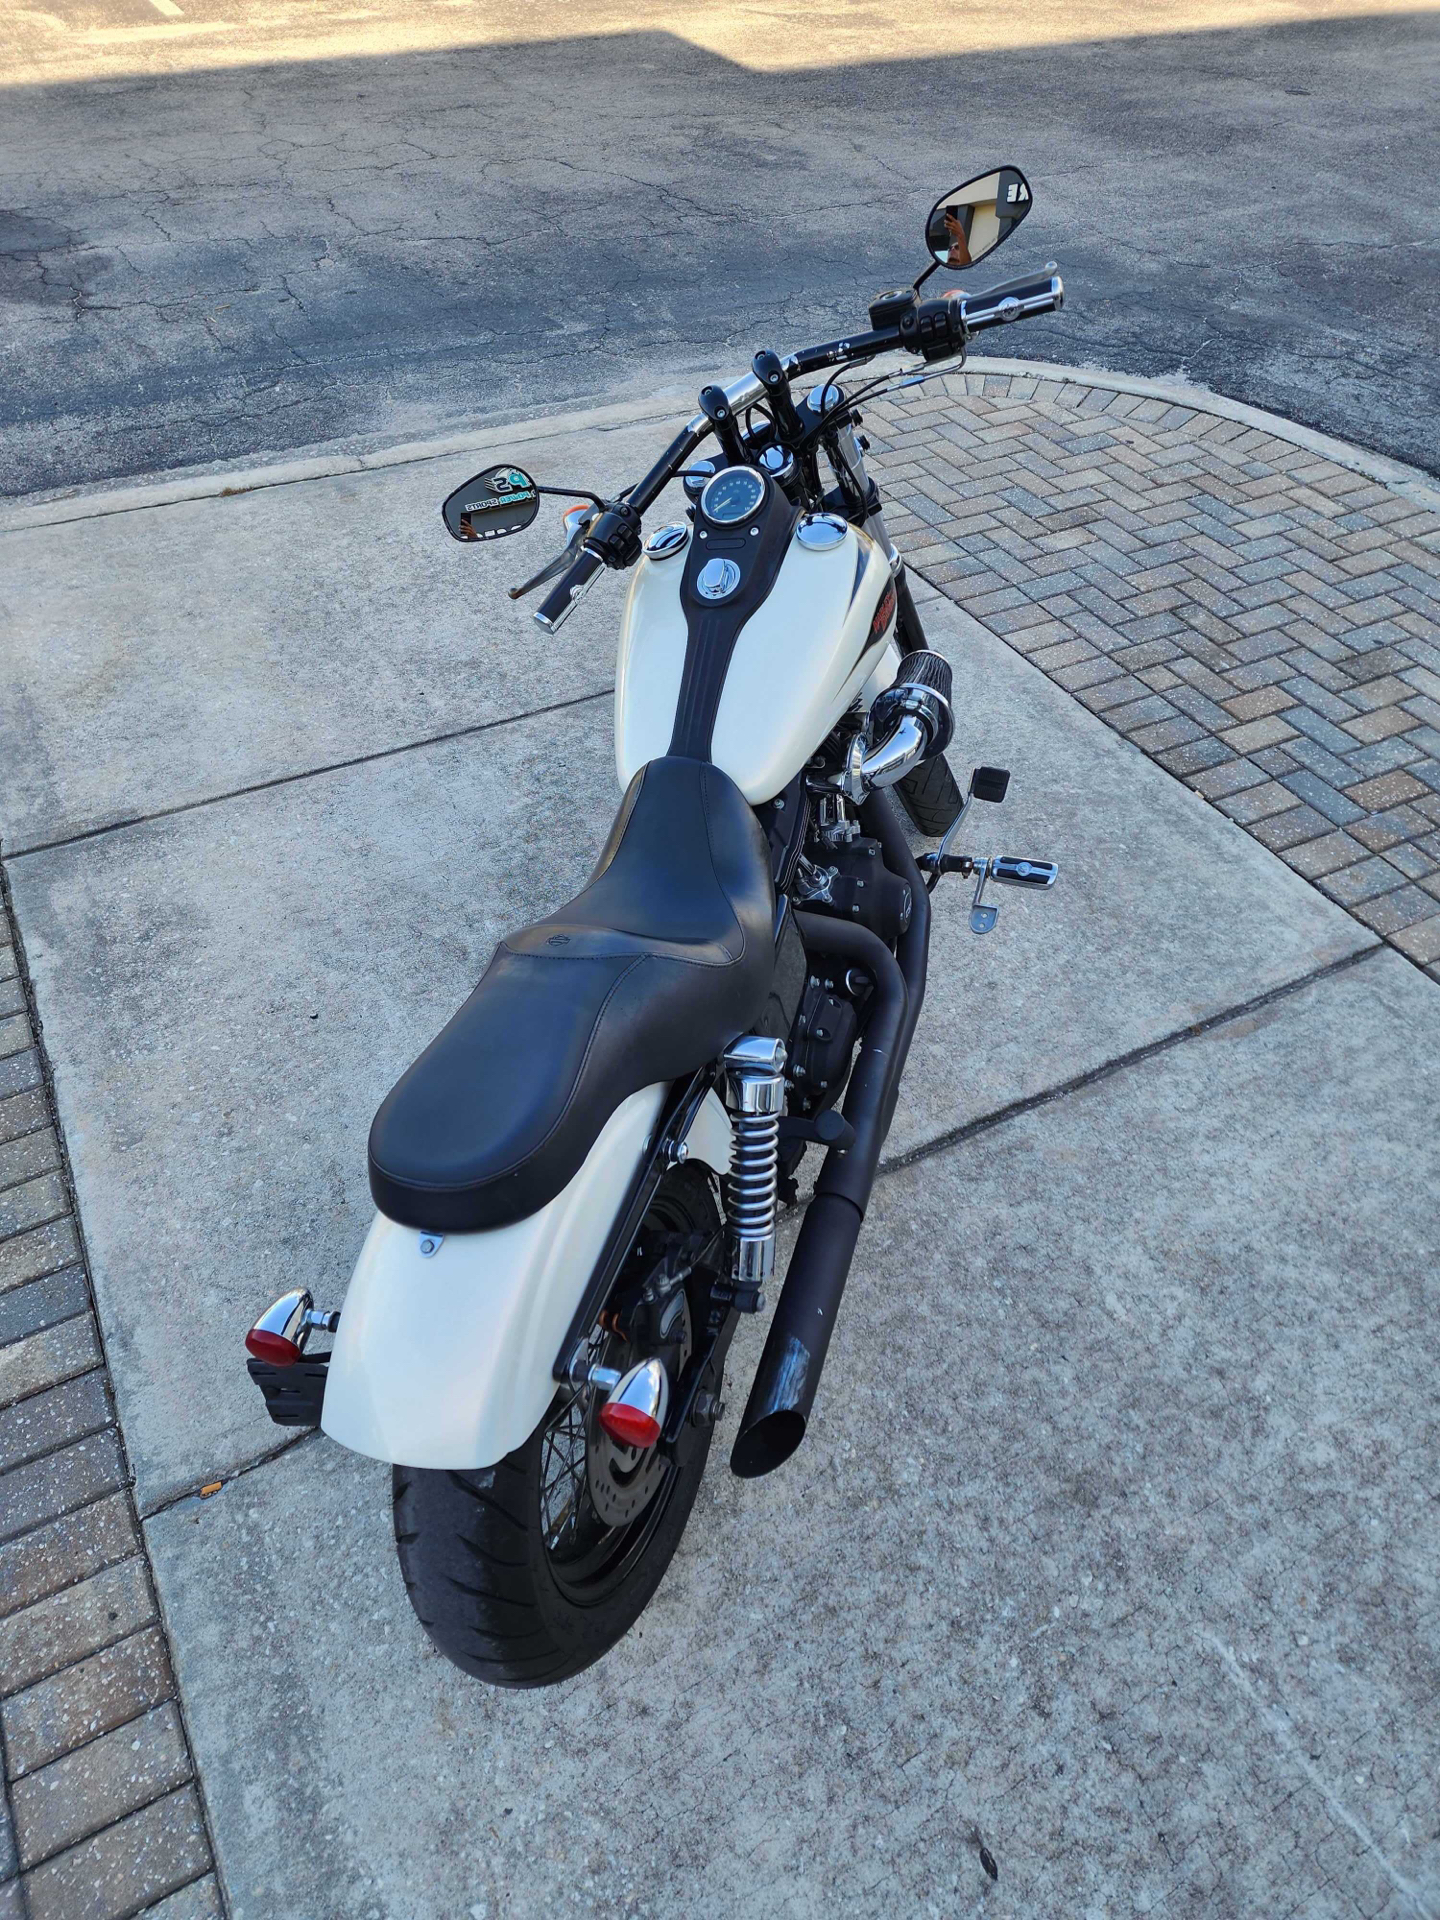 2014 Harley-Davidson Dyna® Street Bob® in Jacksonville, Florida - Photo 5